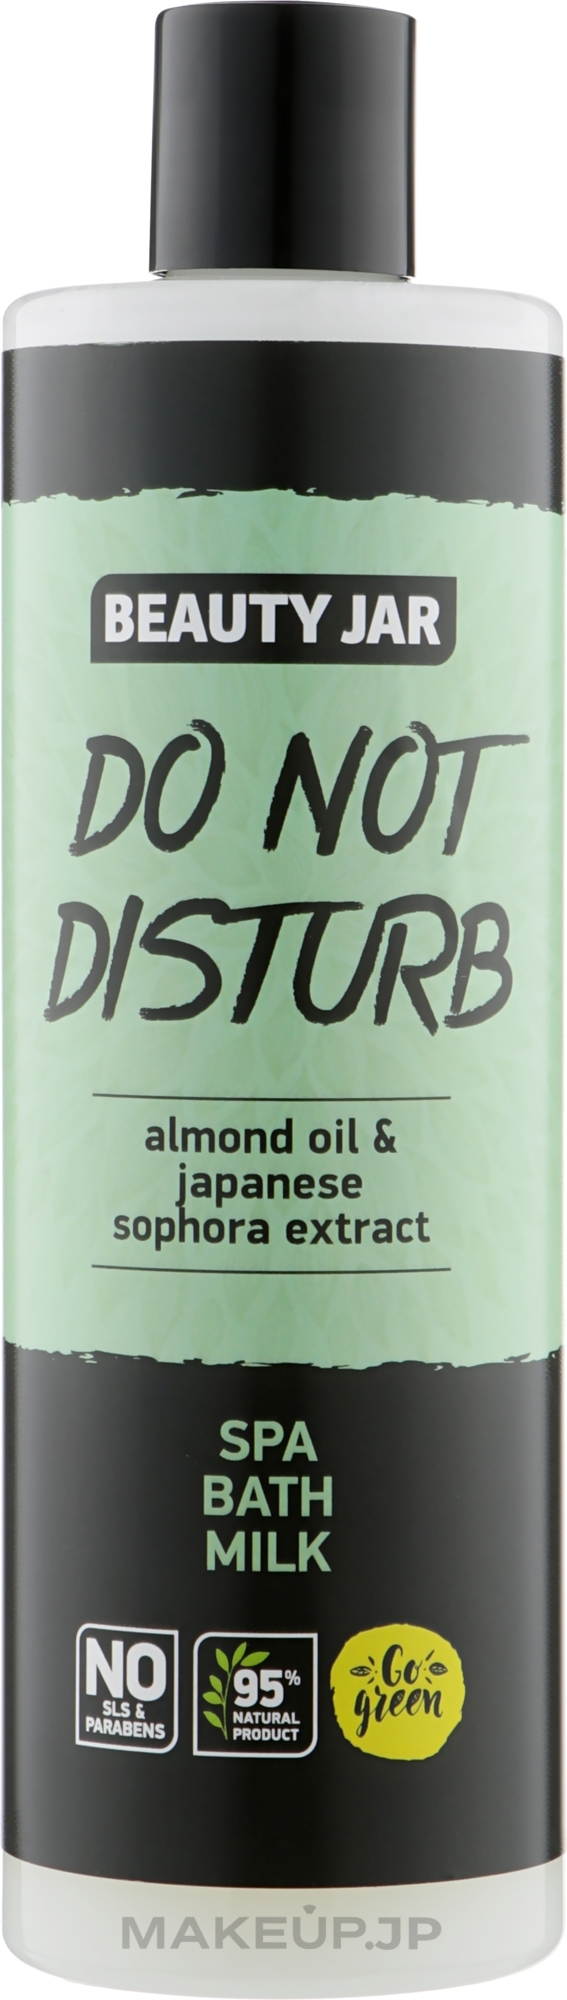 Almond Oil & Japanese Sophora Extract Bath Milk - Beauty Jar Do Not Disturb Spa Bath Milk — photo 400 ml